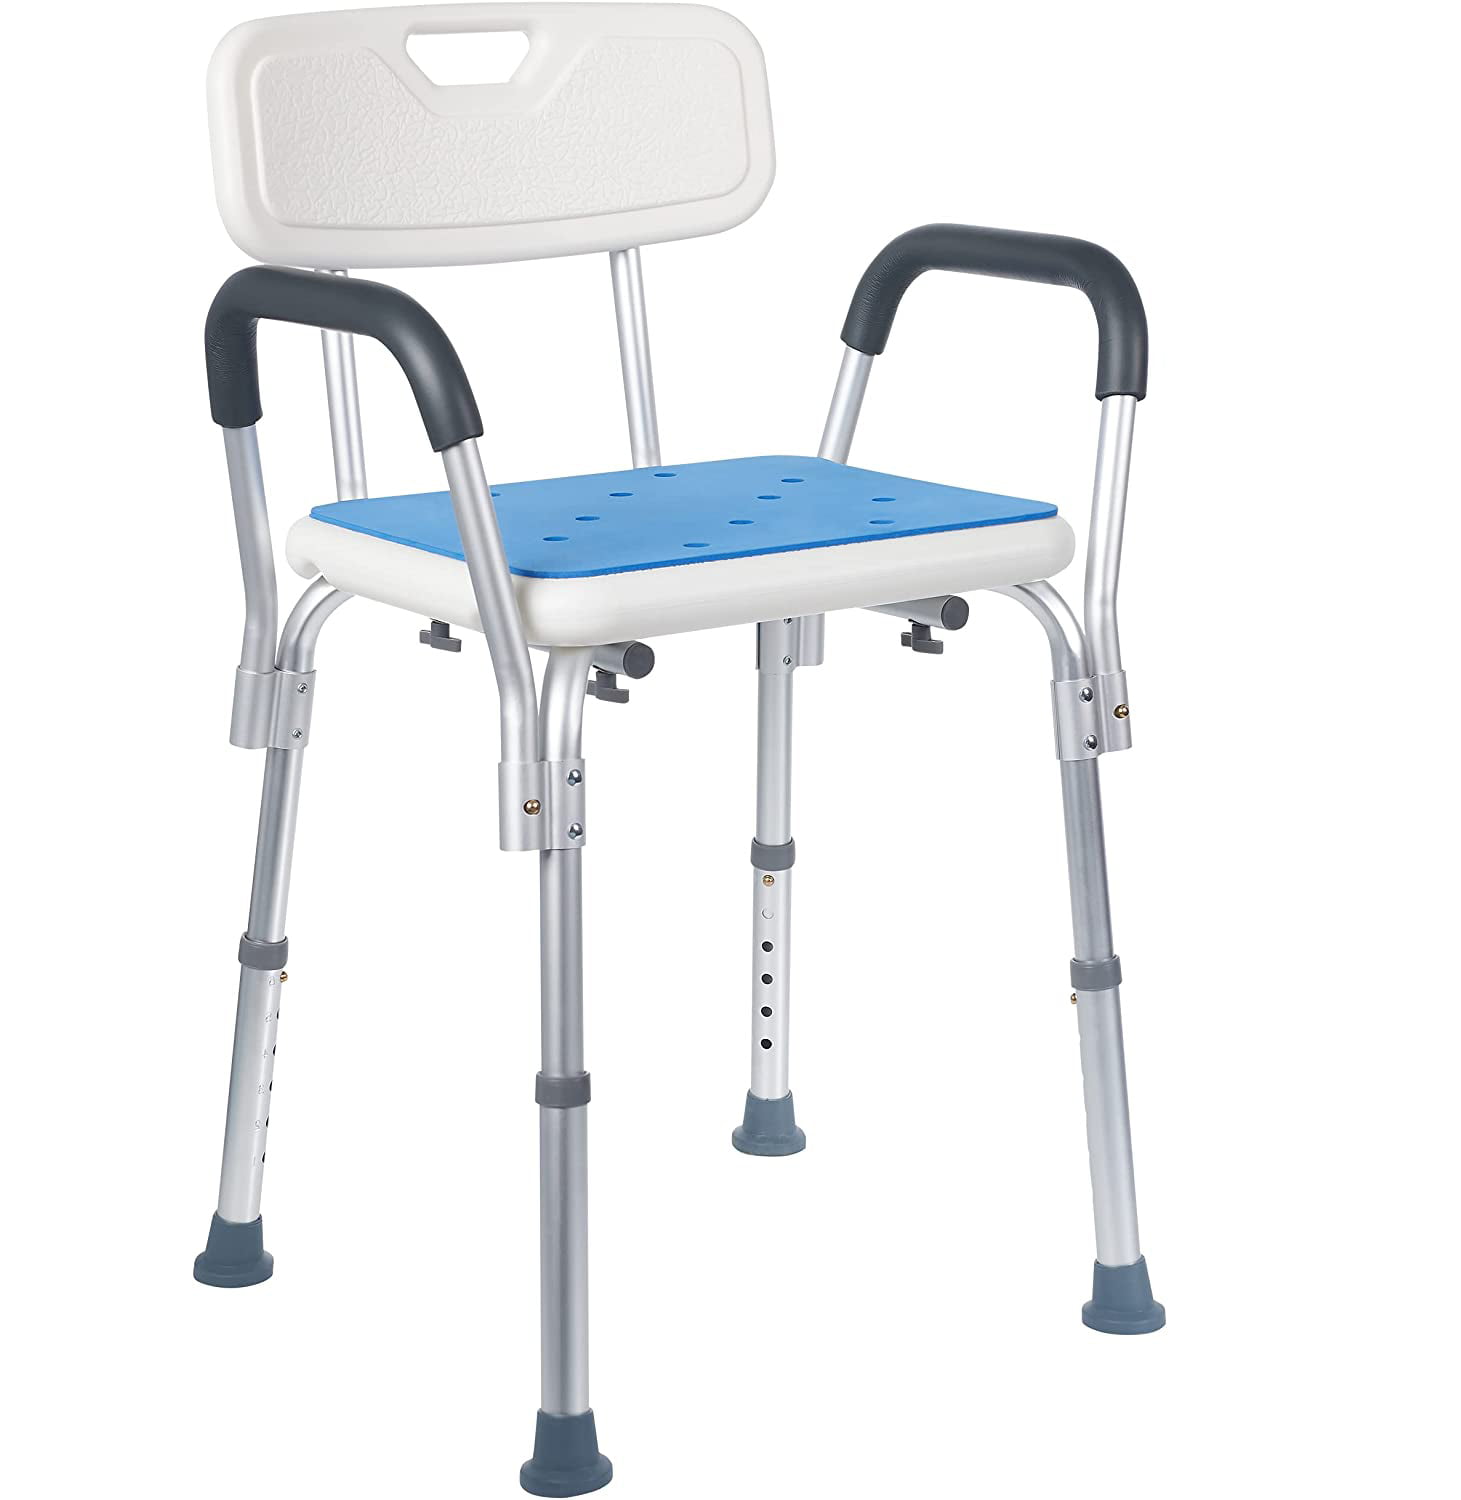 Shower Chair for Elderly - Easily Adjustable Chairs for Inside Bathtub